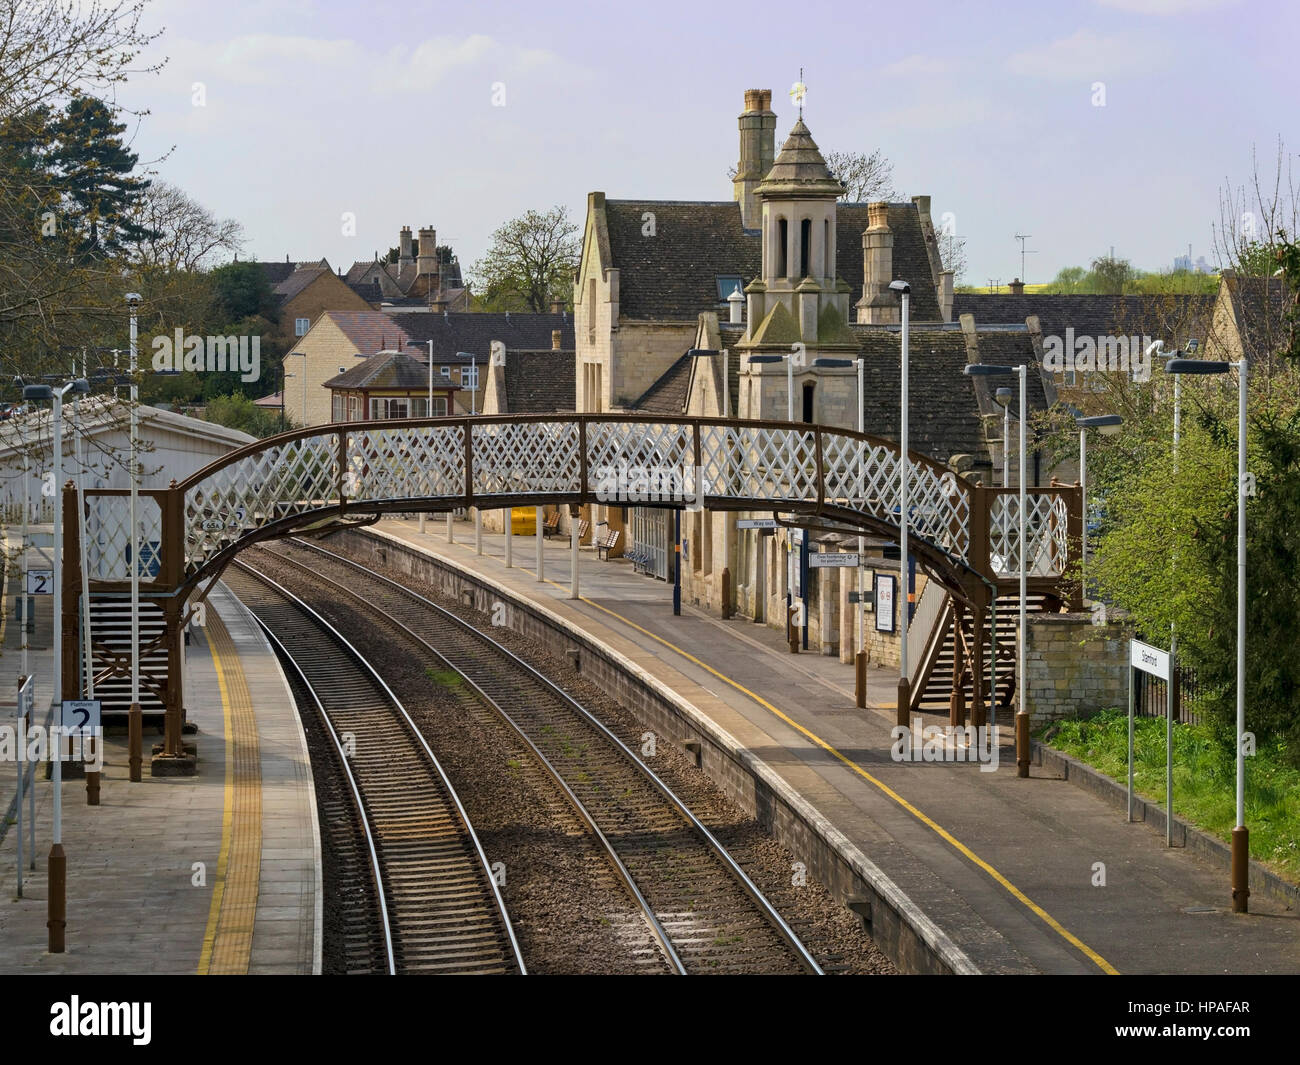 Train tracks, footbridge and deserted station platforms, Stamford Railway Station, Stamford, Lincolnshire, England, UK Stock Photo